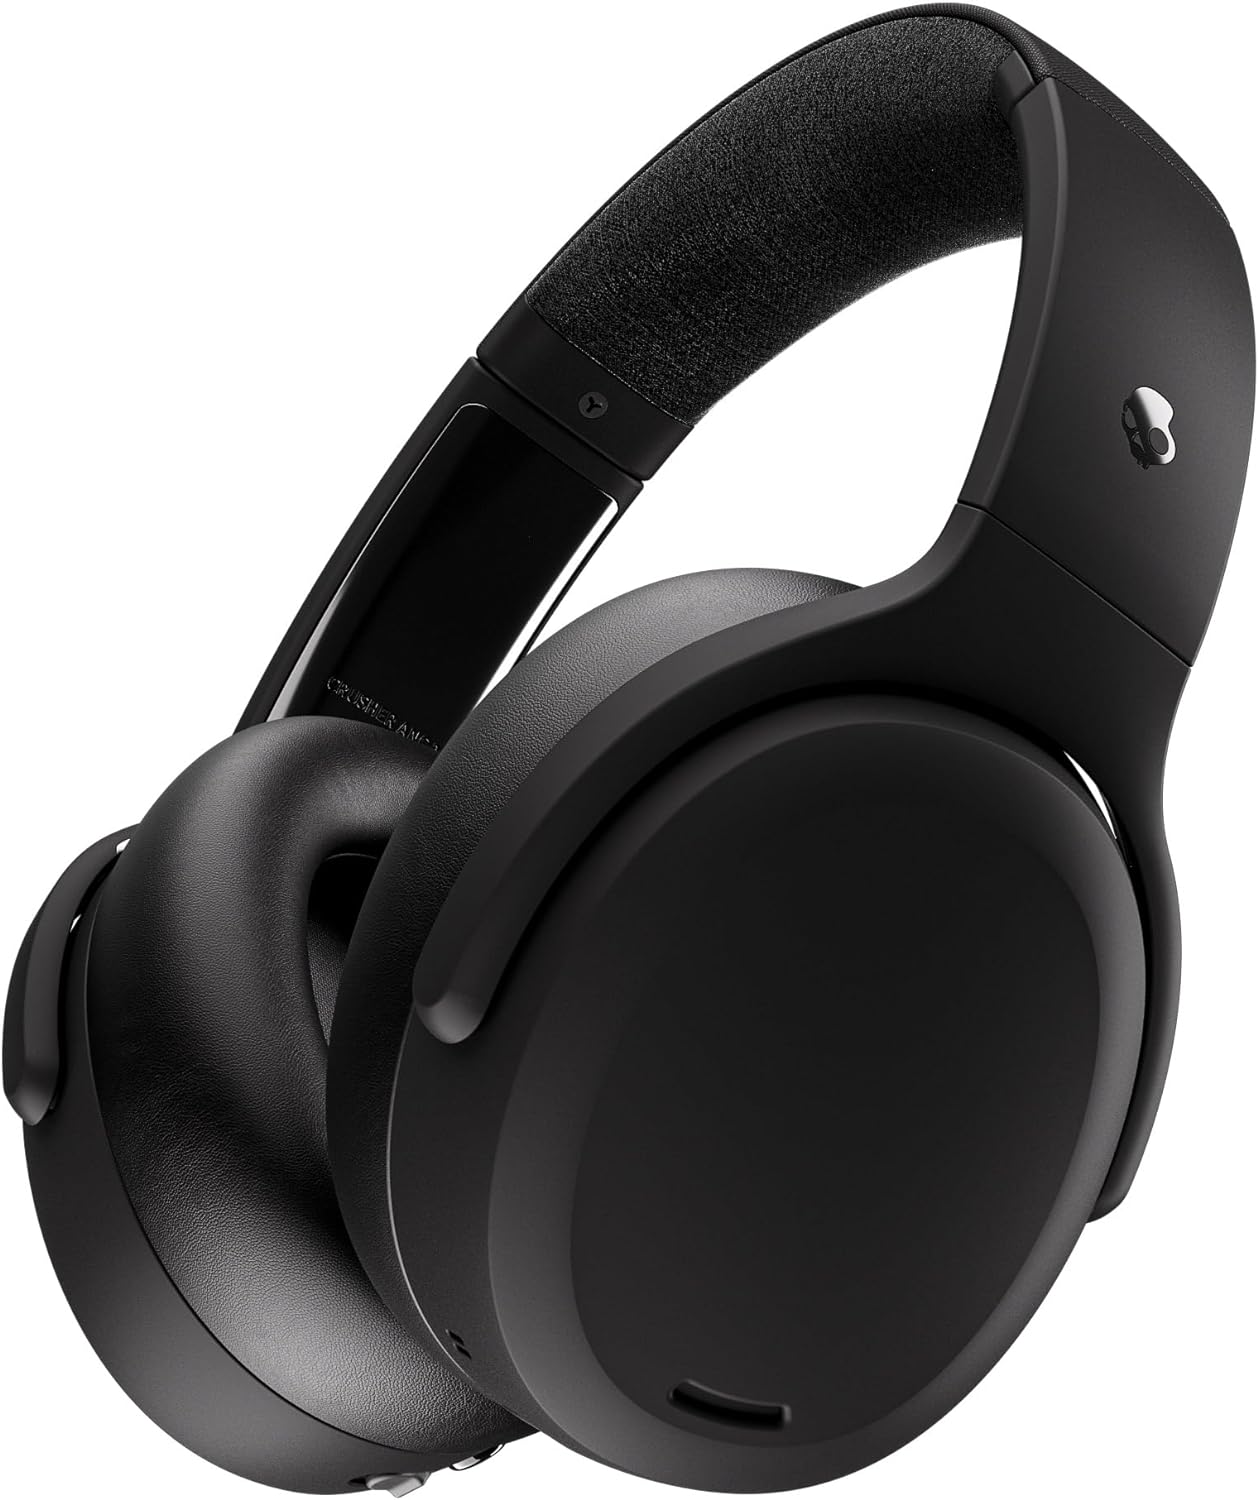 Skullcandy Crusher ANC 2 Sensory Bass Over-Ear Noise Cancelling Wireless Headphones $130 + Free Shipping w/ Amazon Prime